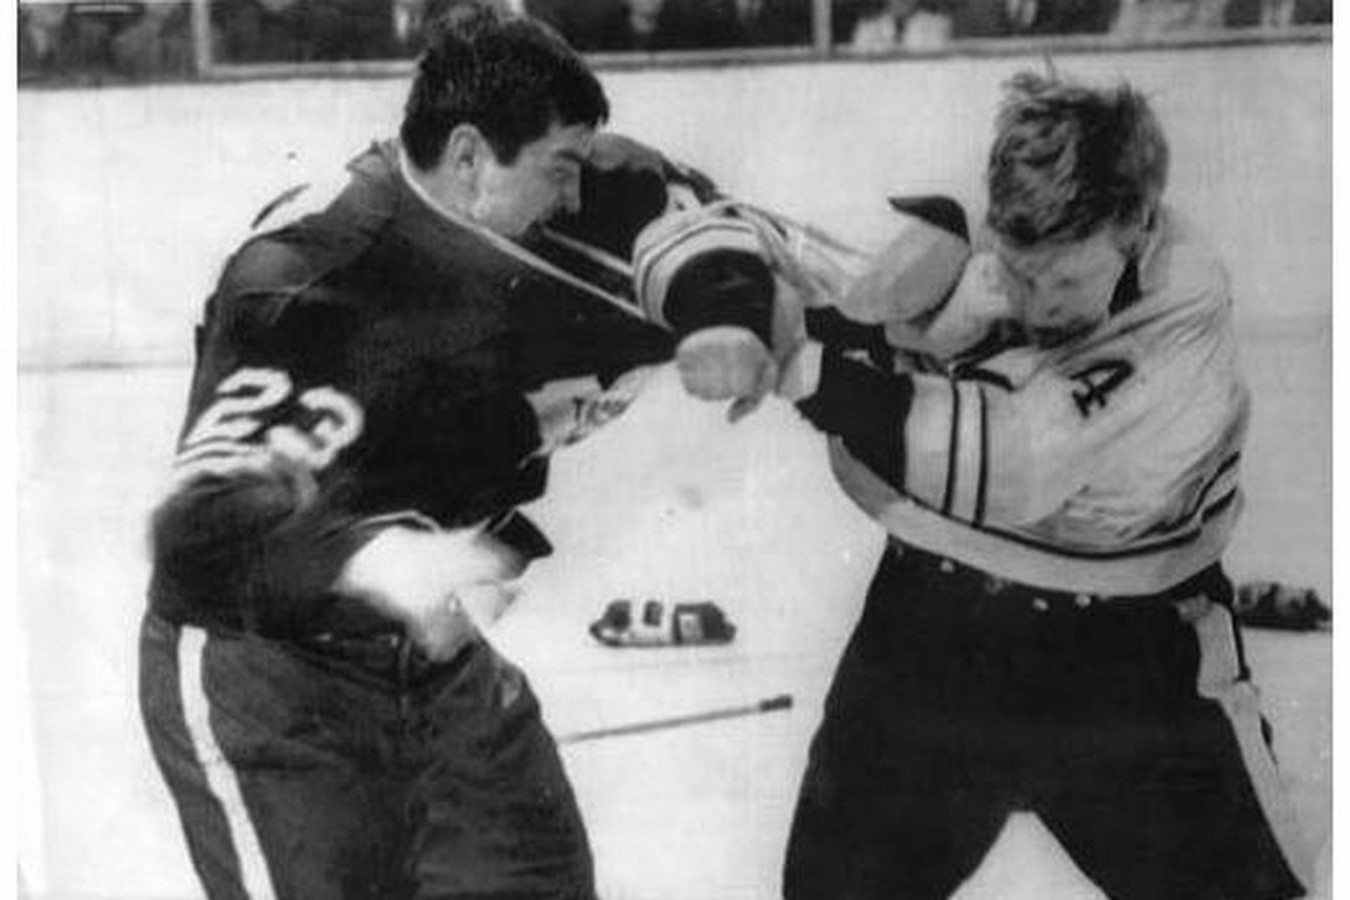 A Look Back at the Big Bad Bruins